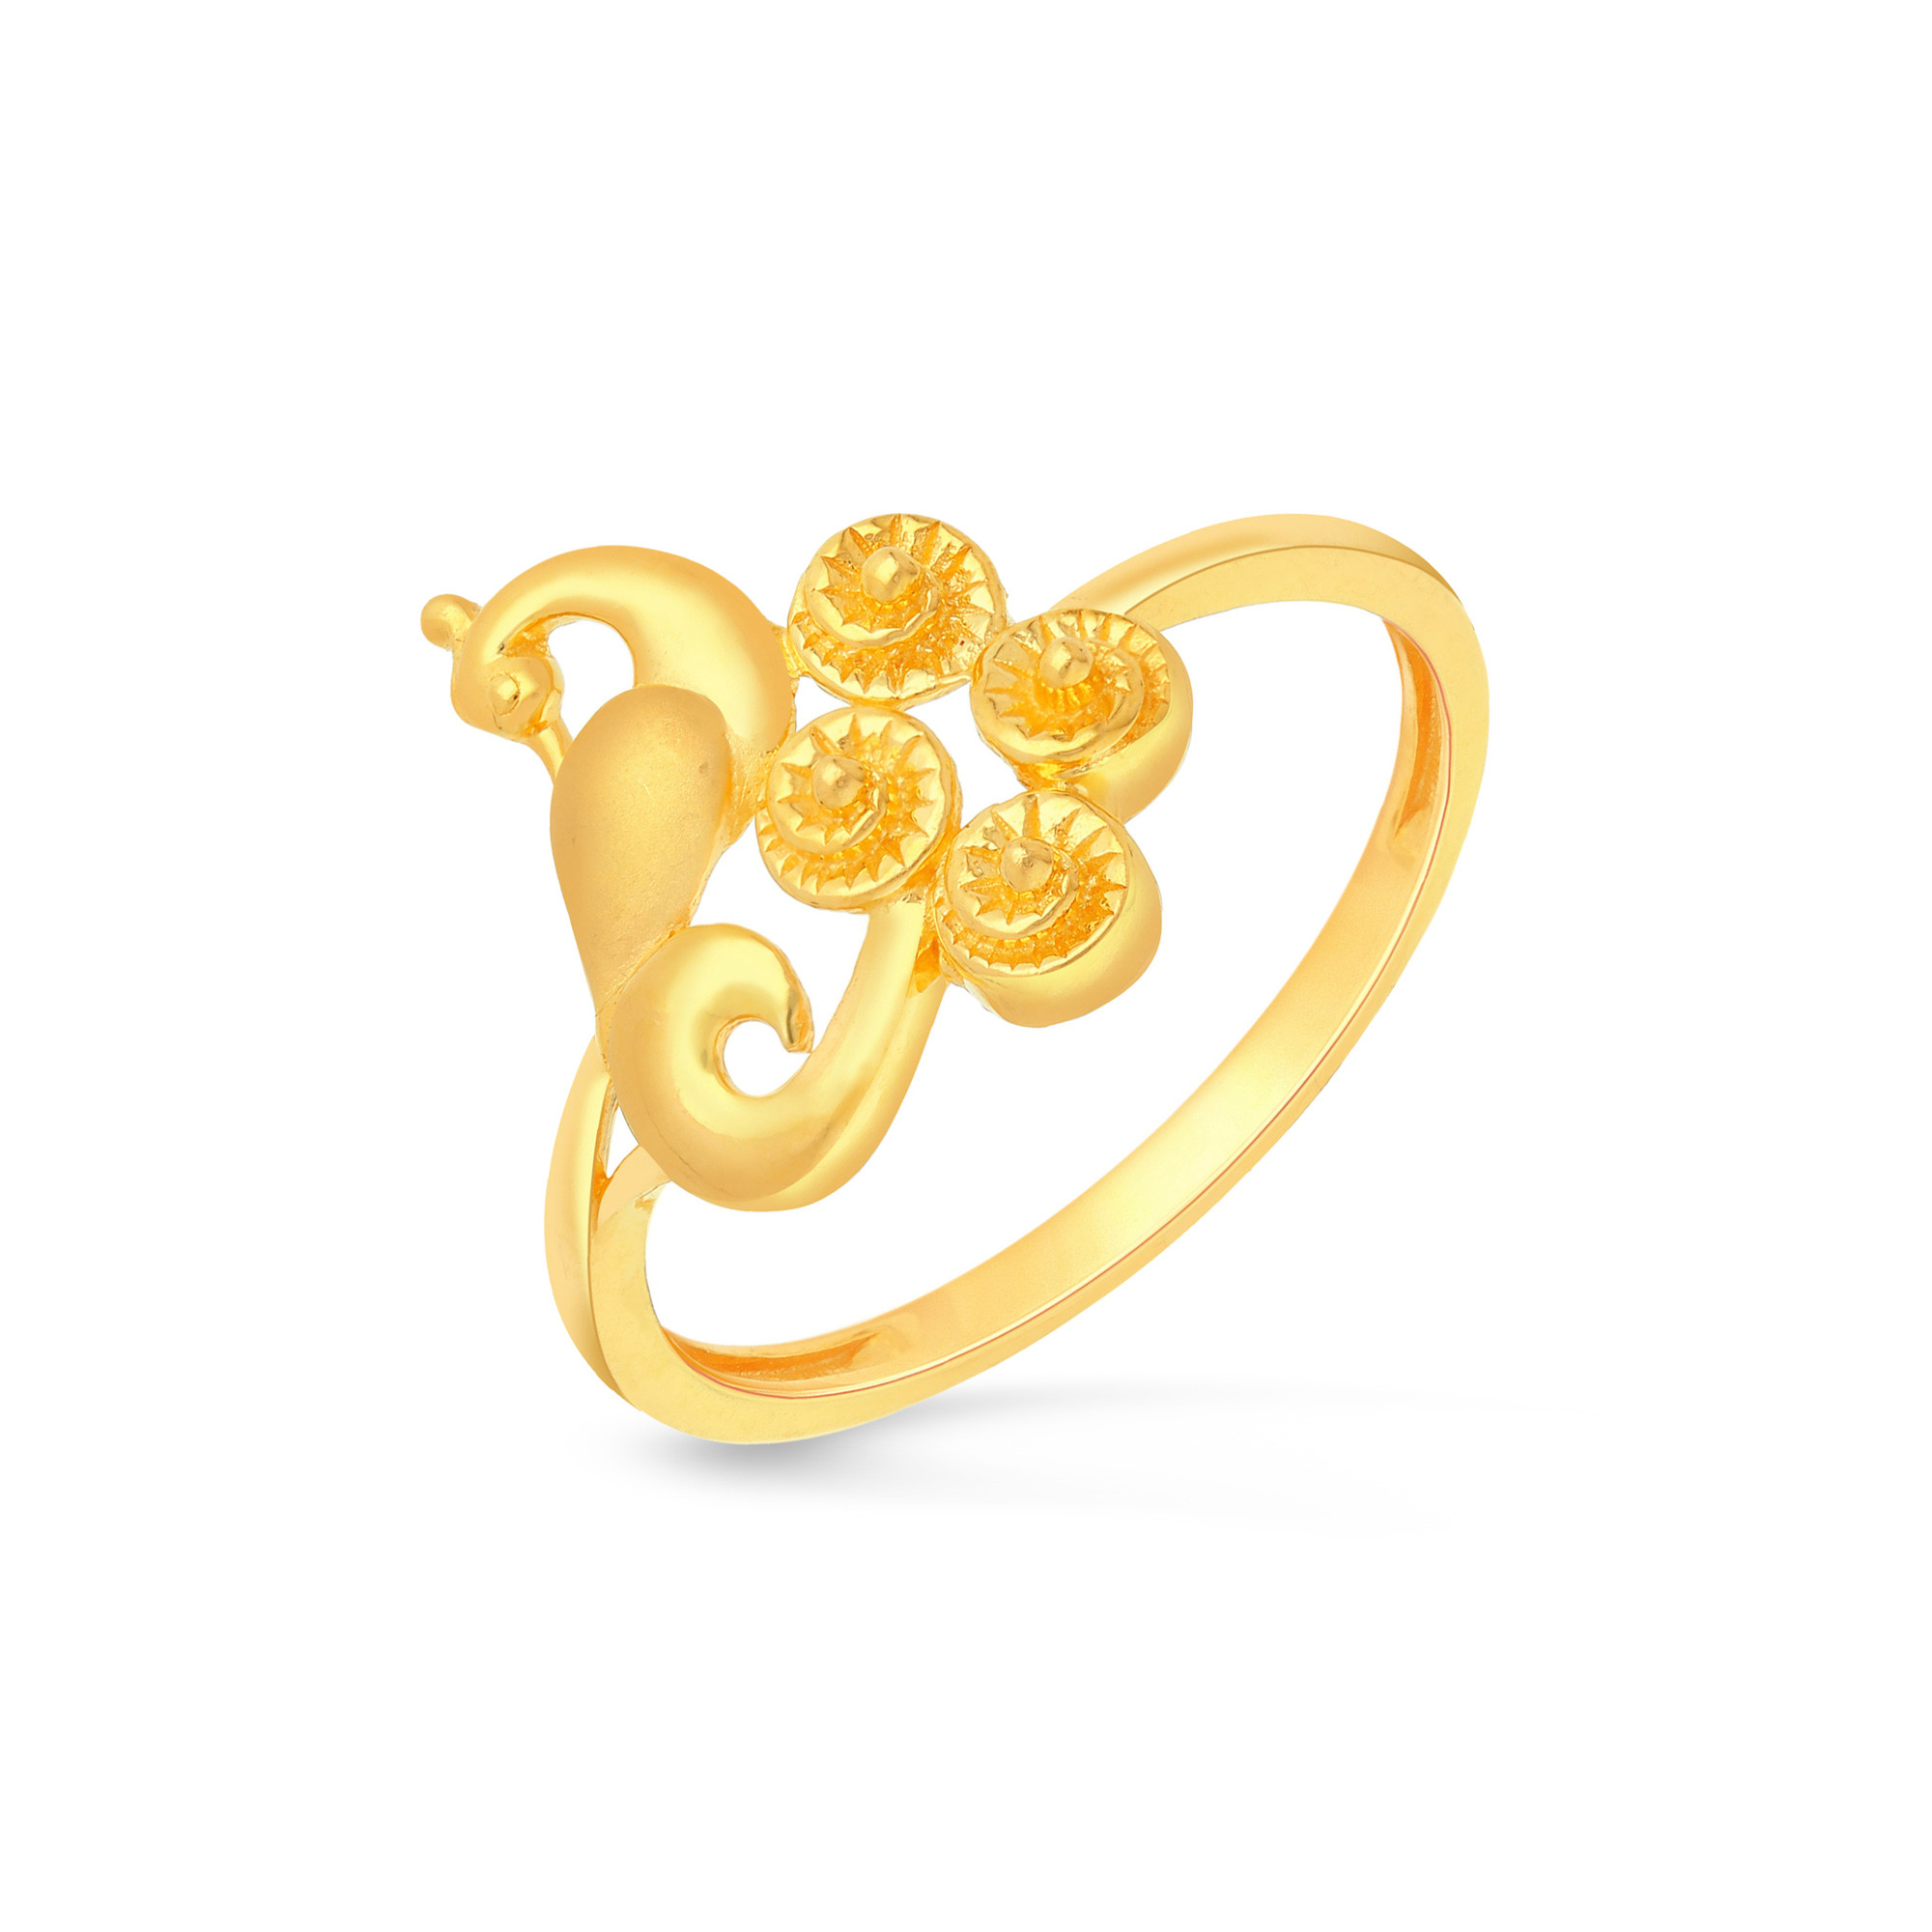 Malabar Gold Ring SKPLR6405